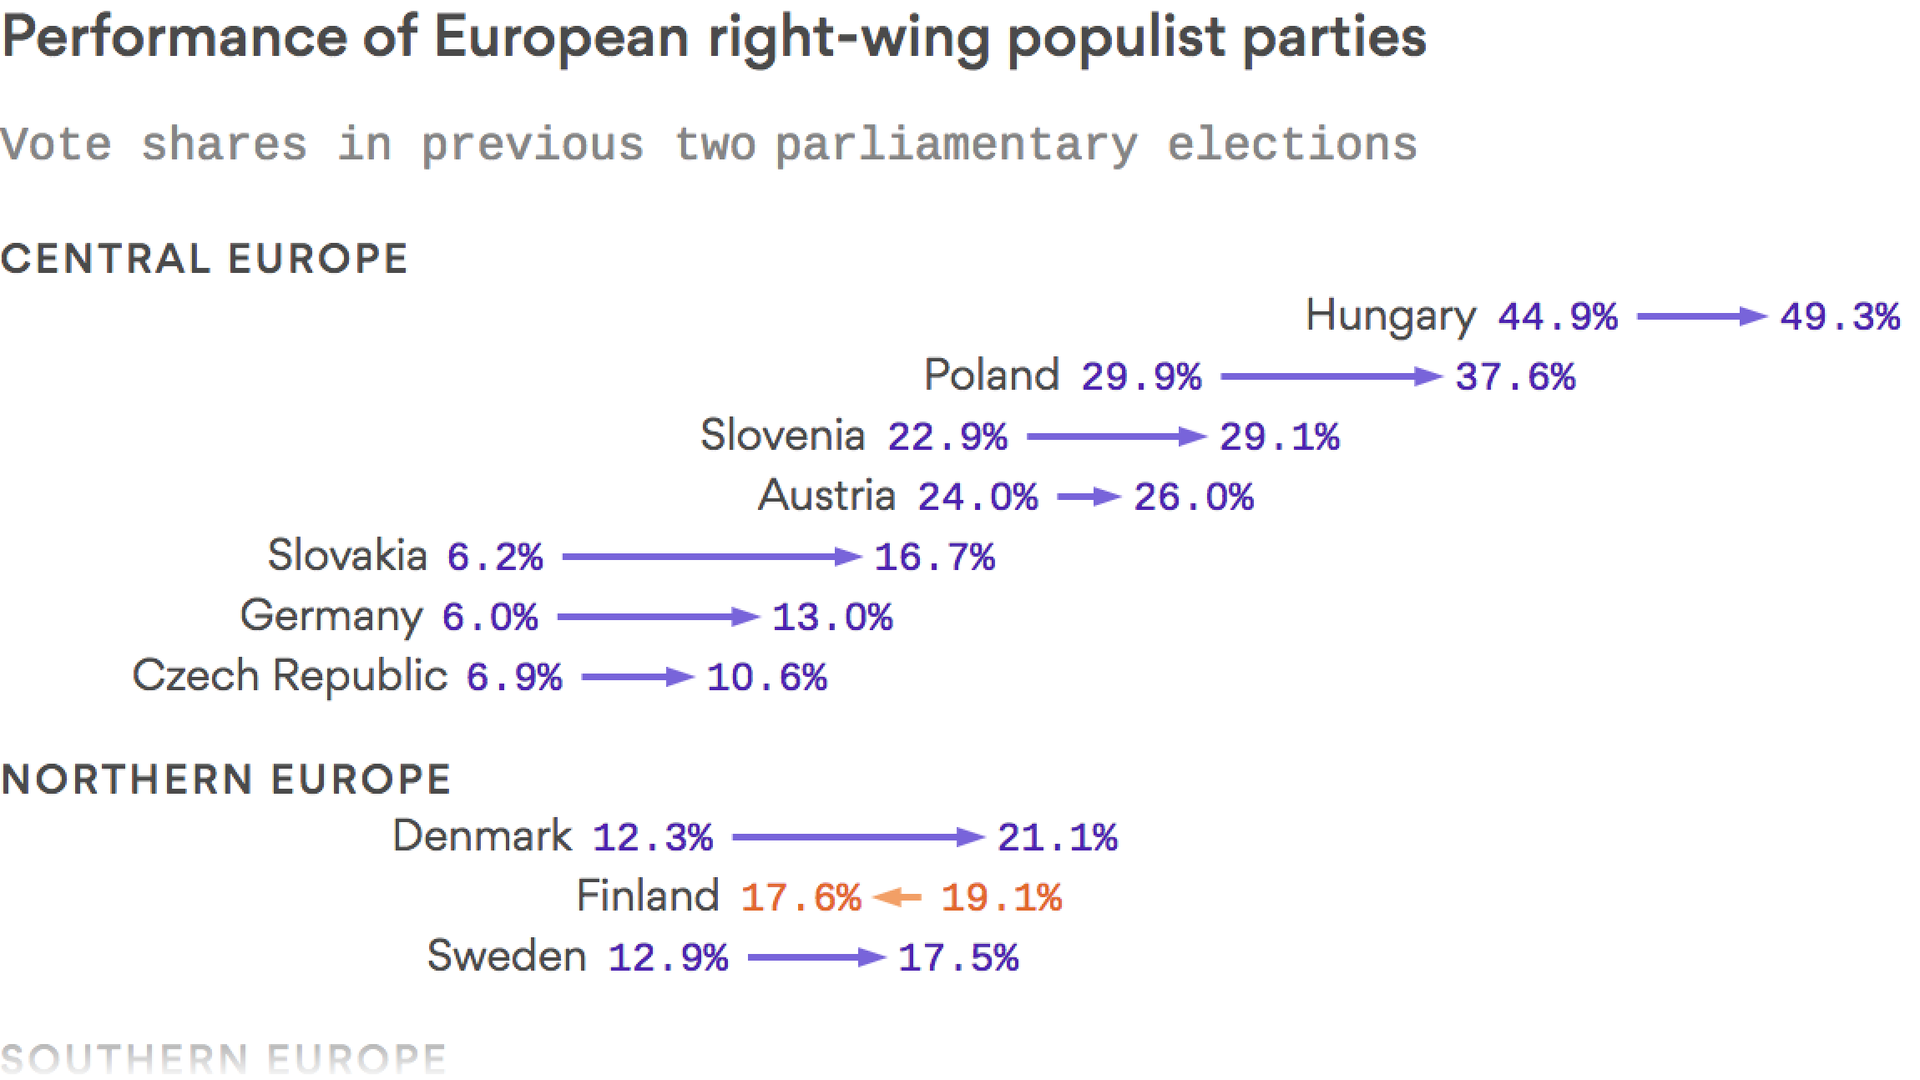 Populists Vs Progressives Chart